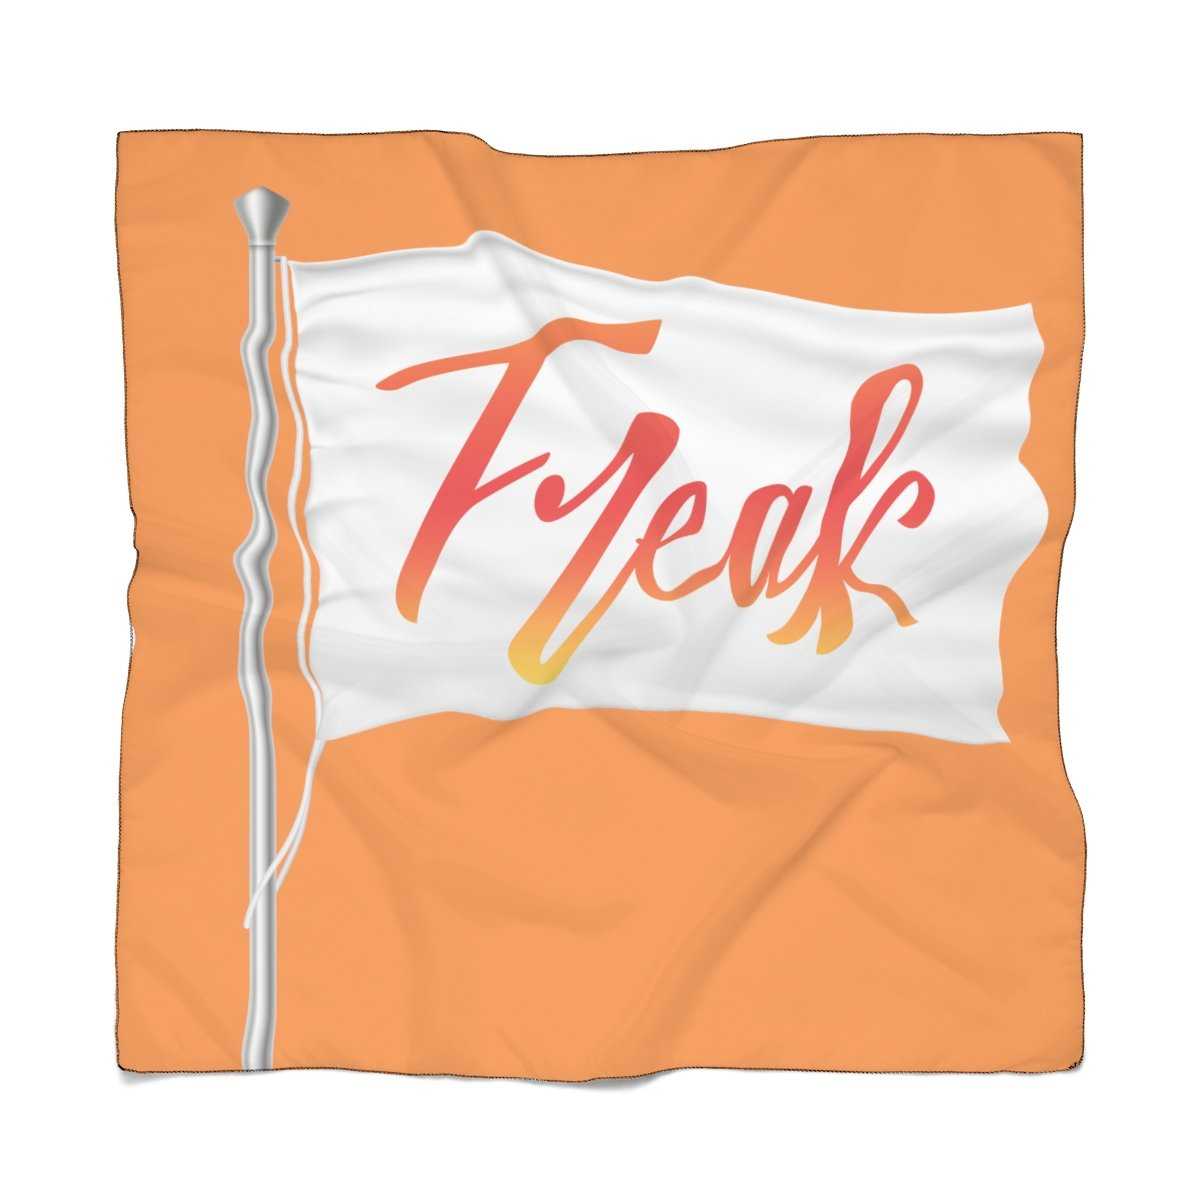 FREAK Flag Hankie in Sunset - shopcontrabrands.com